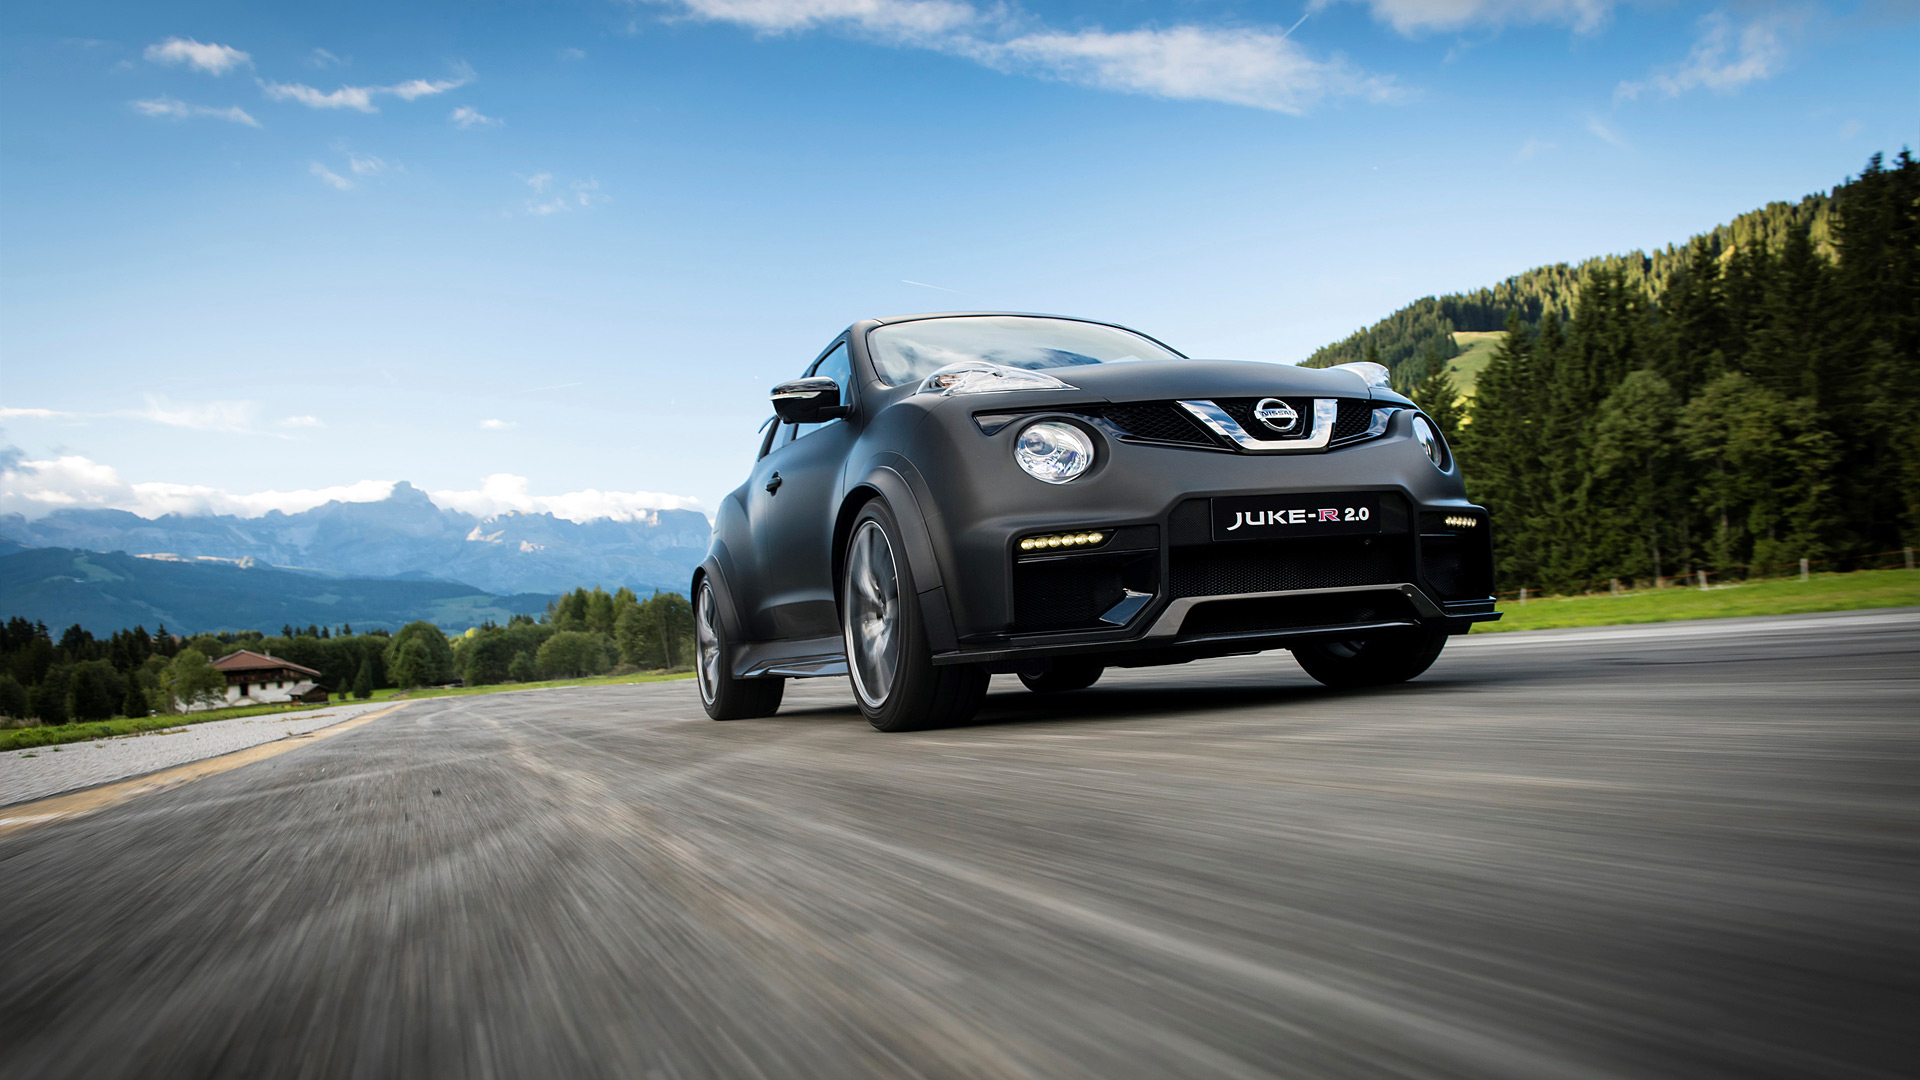  2015 Nissan Juke-R 2.0 Concept Wallpaper.